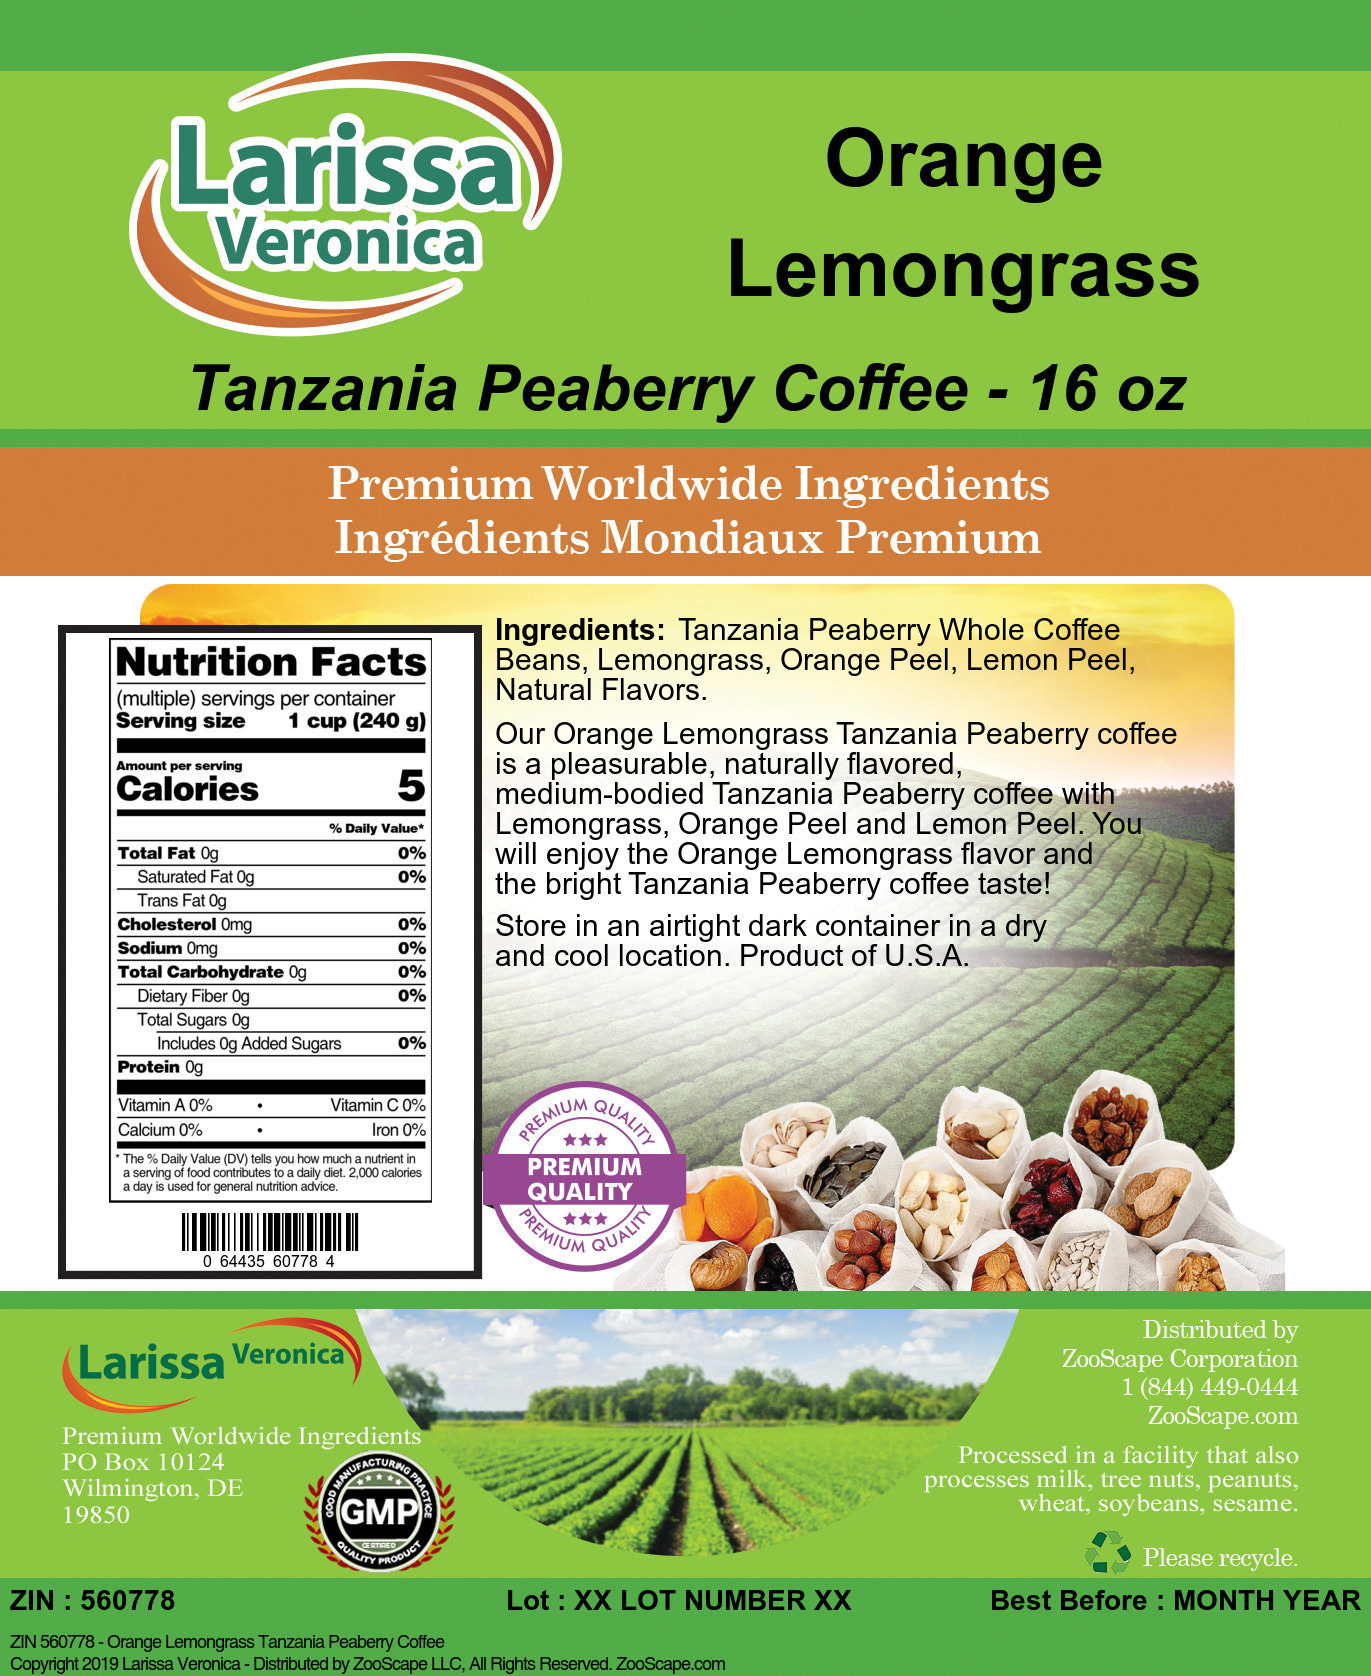 Orange Lemongrass Tanzania Peaberry Coffee - Label